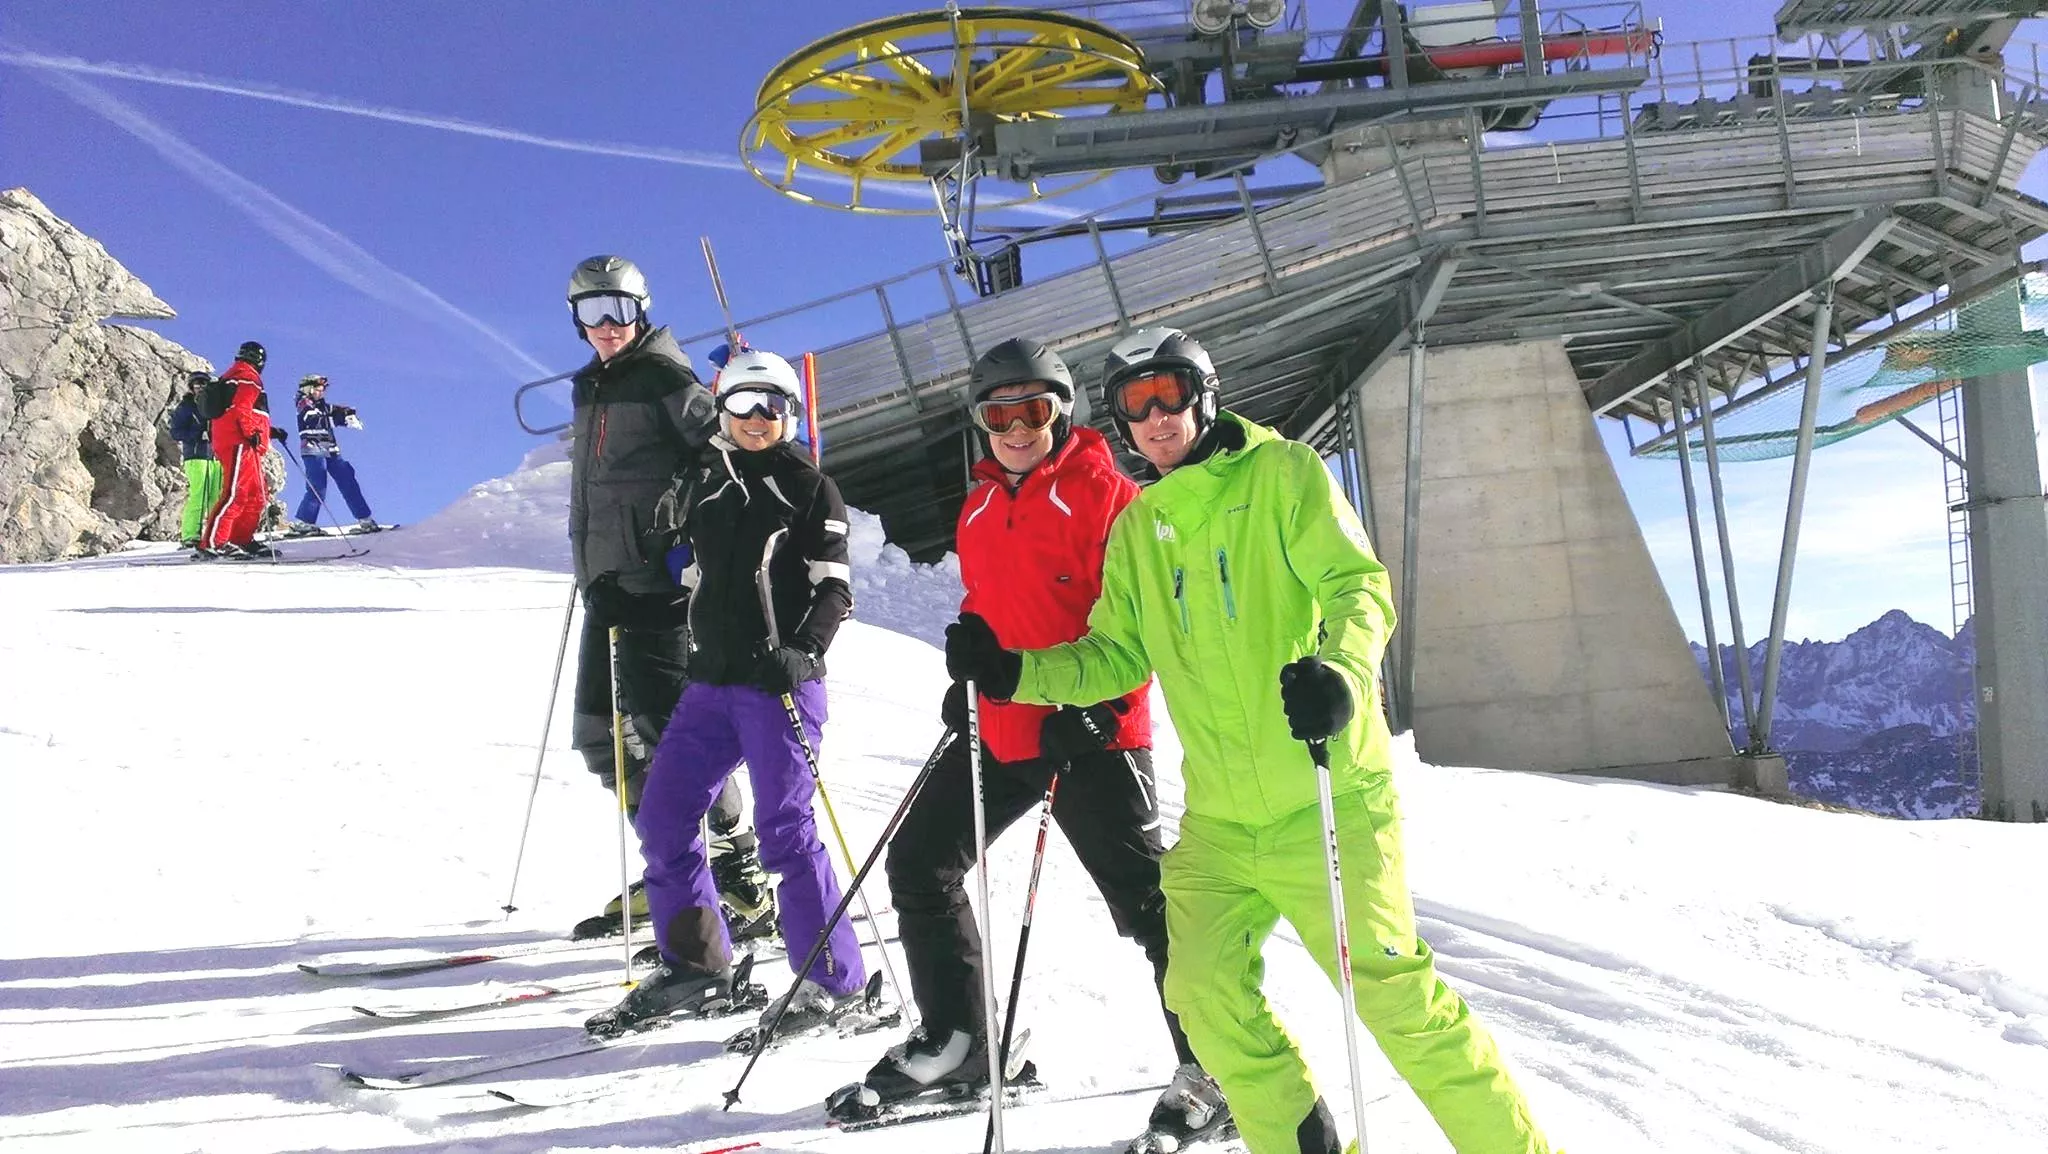 Alpine Ski School Oberstdorf in Germany, Europe | Snowboarding,Skiing - Rated 0.9